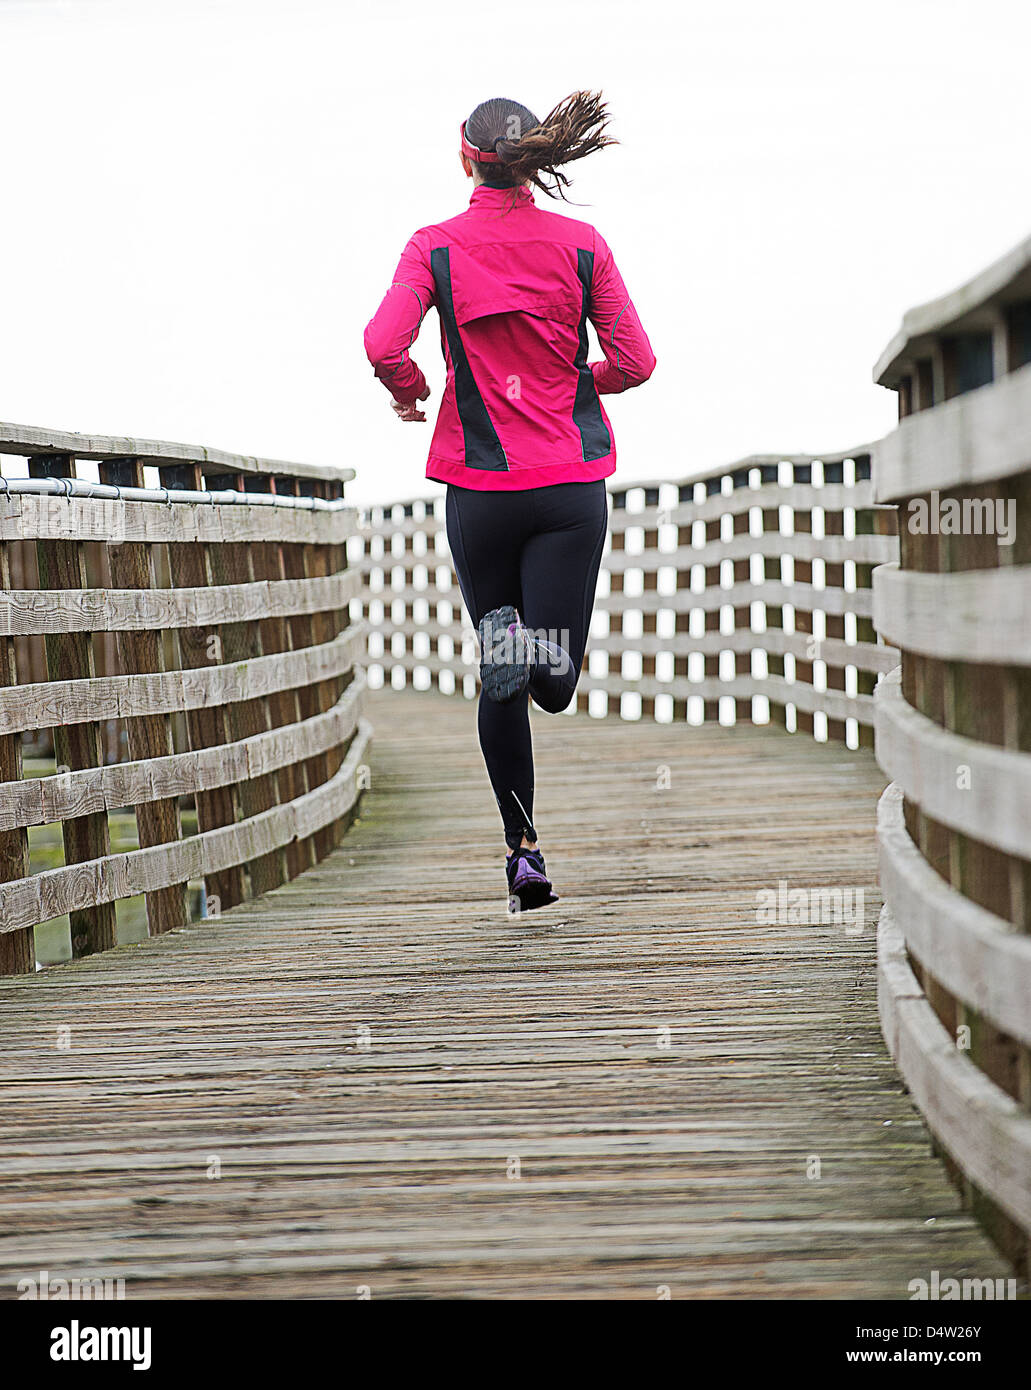 Woman running on wooden dock Stock Photo